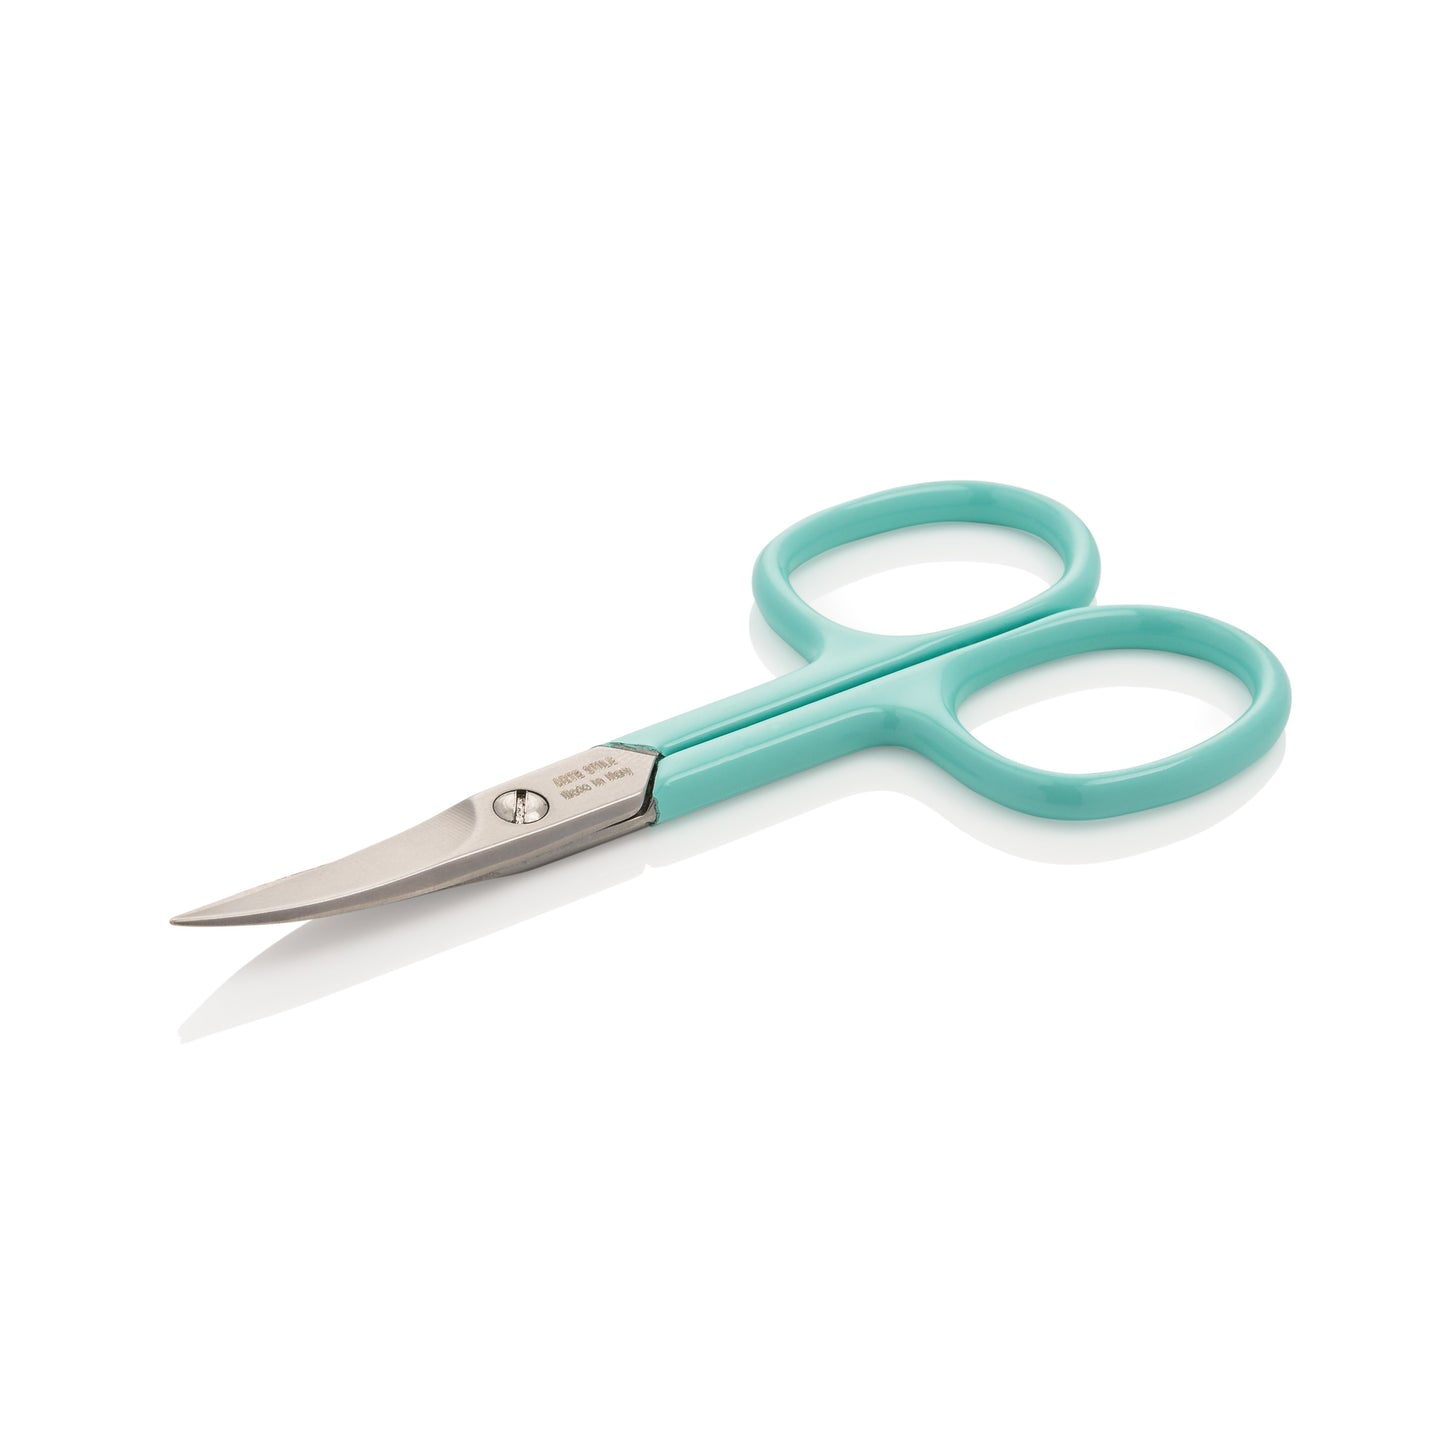 Nail Scissors in Turquoise - ArteStile Beauty